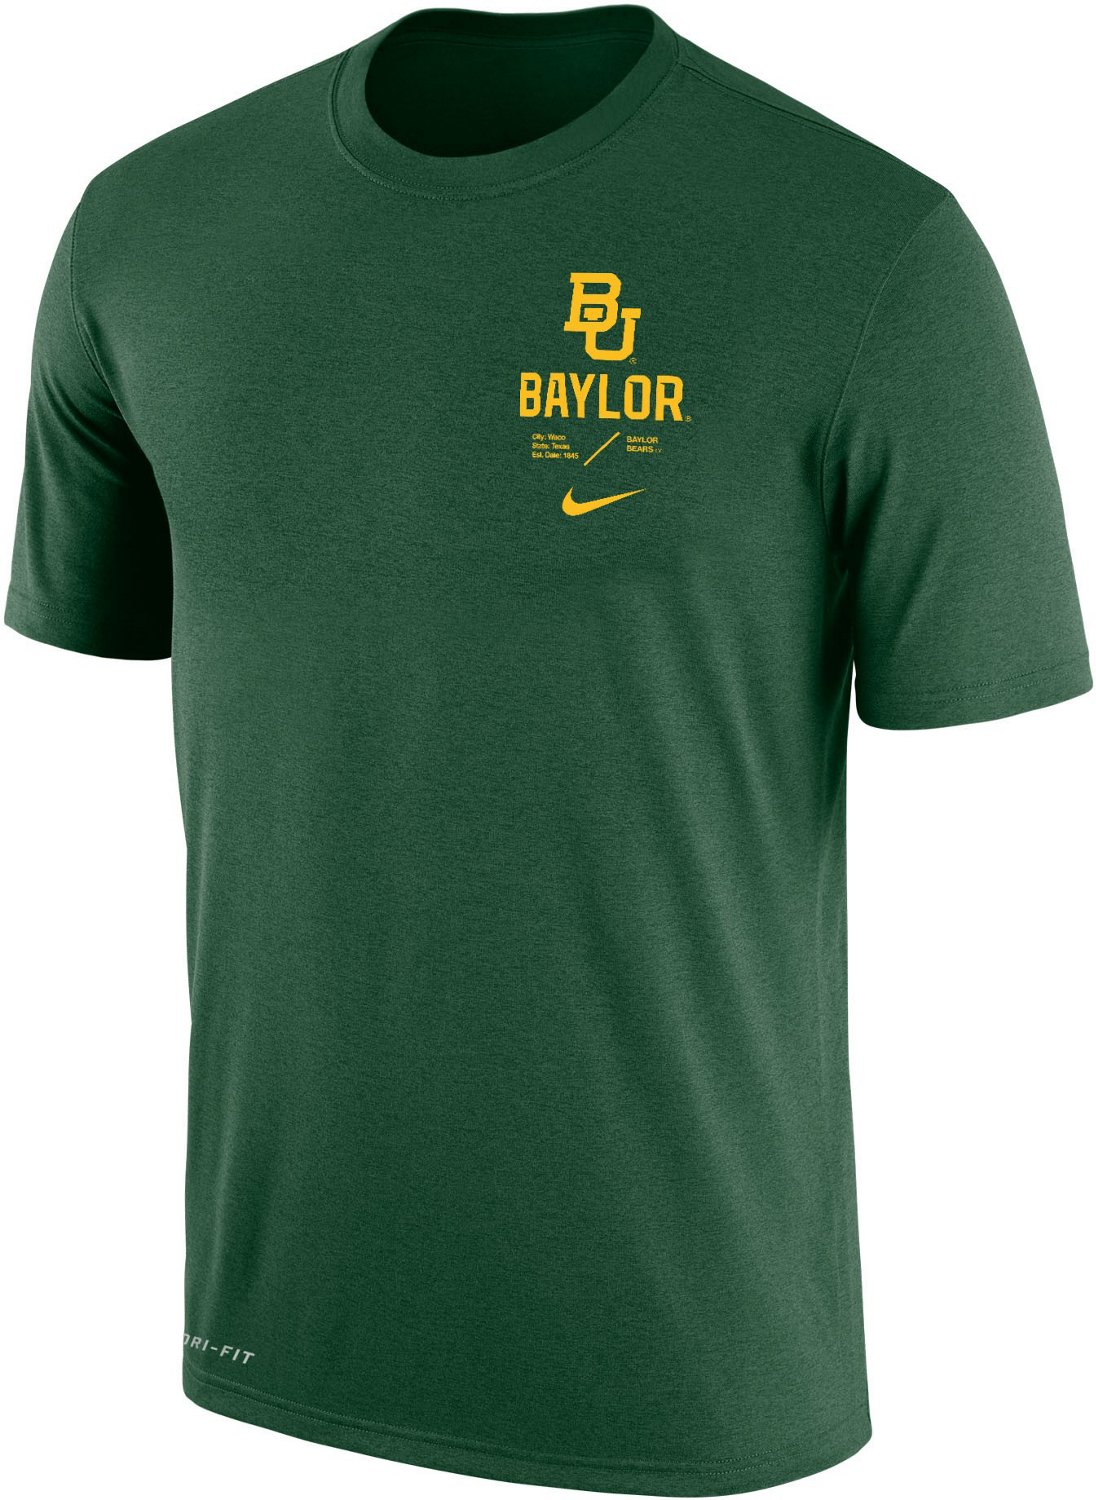 Nike Men's Baylor University Dri-FIT Cotton Team Issue T-shirt | Academy